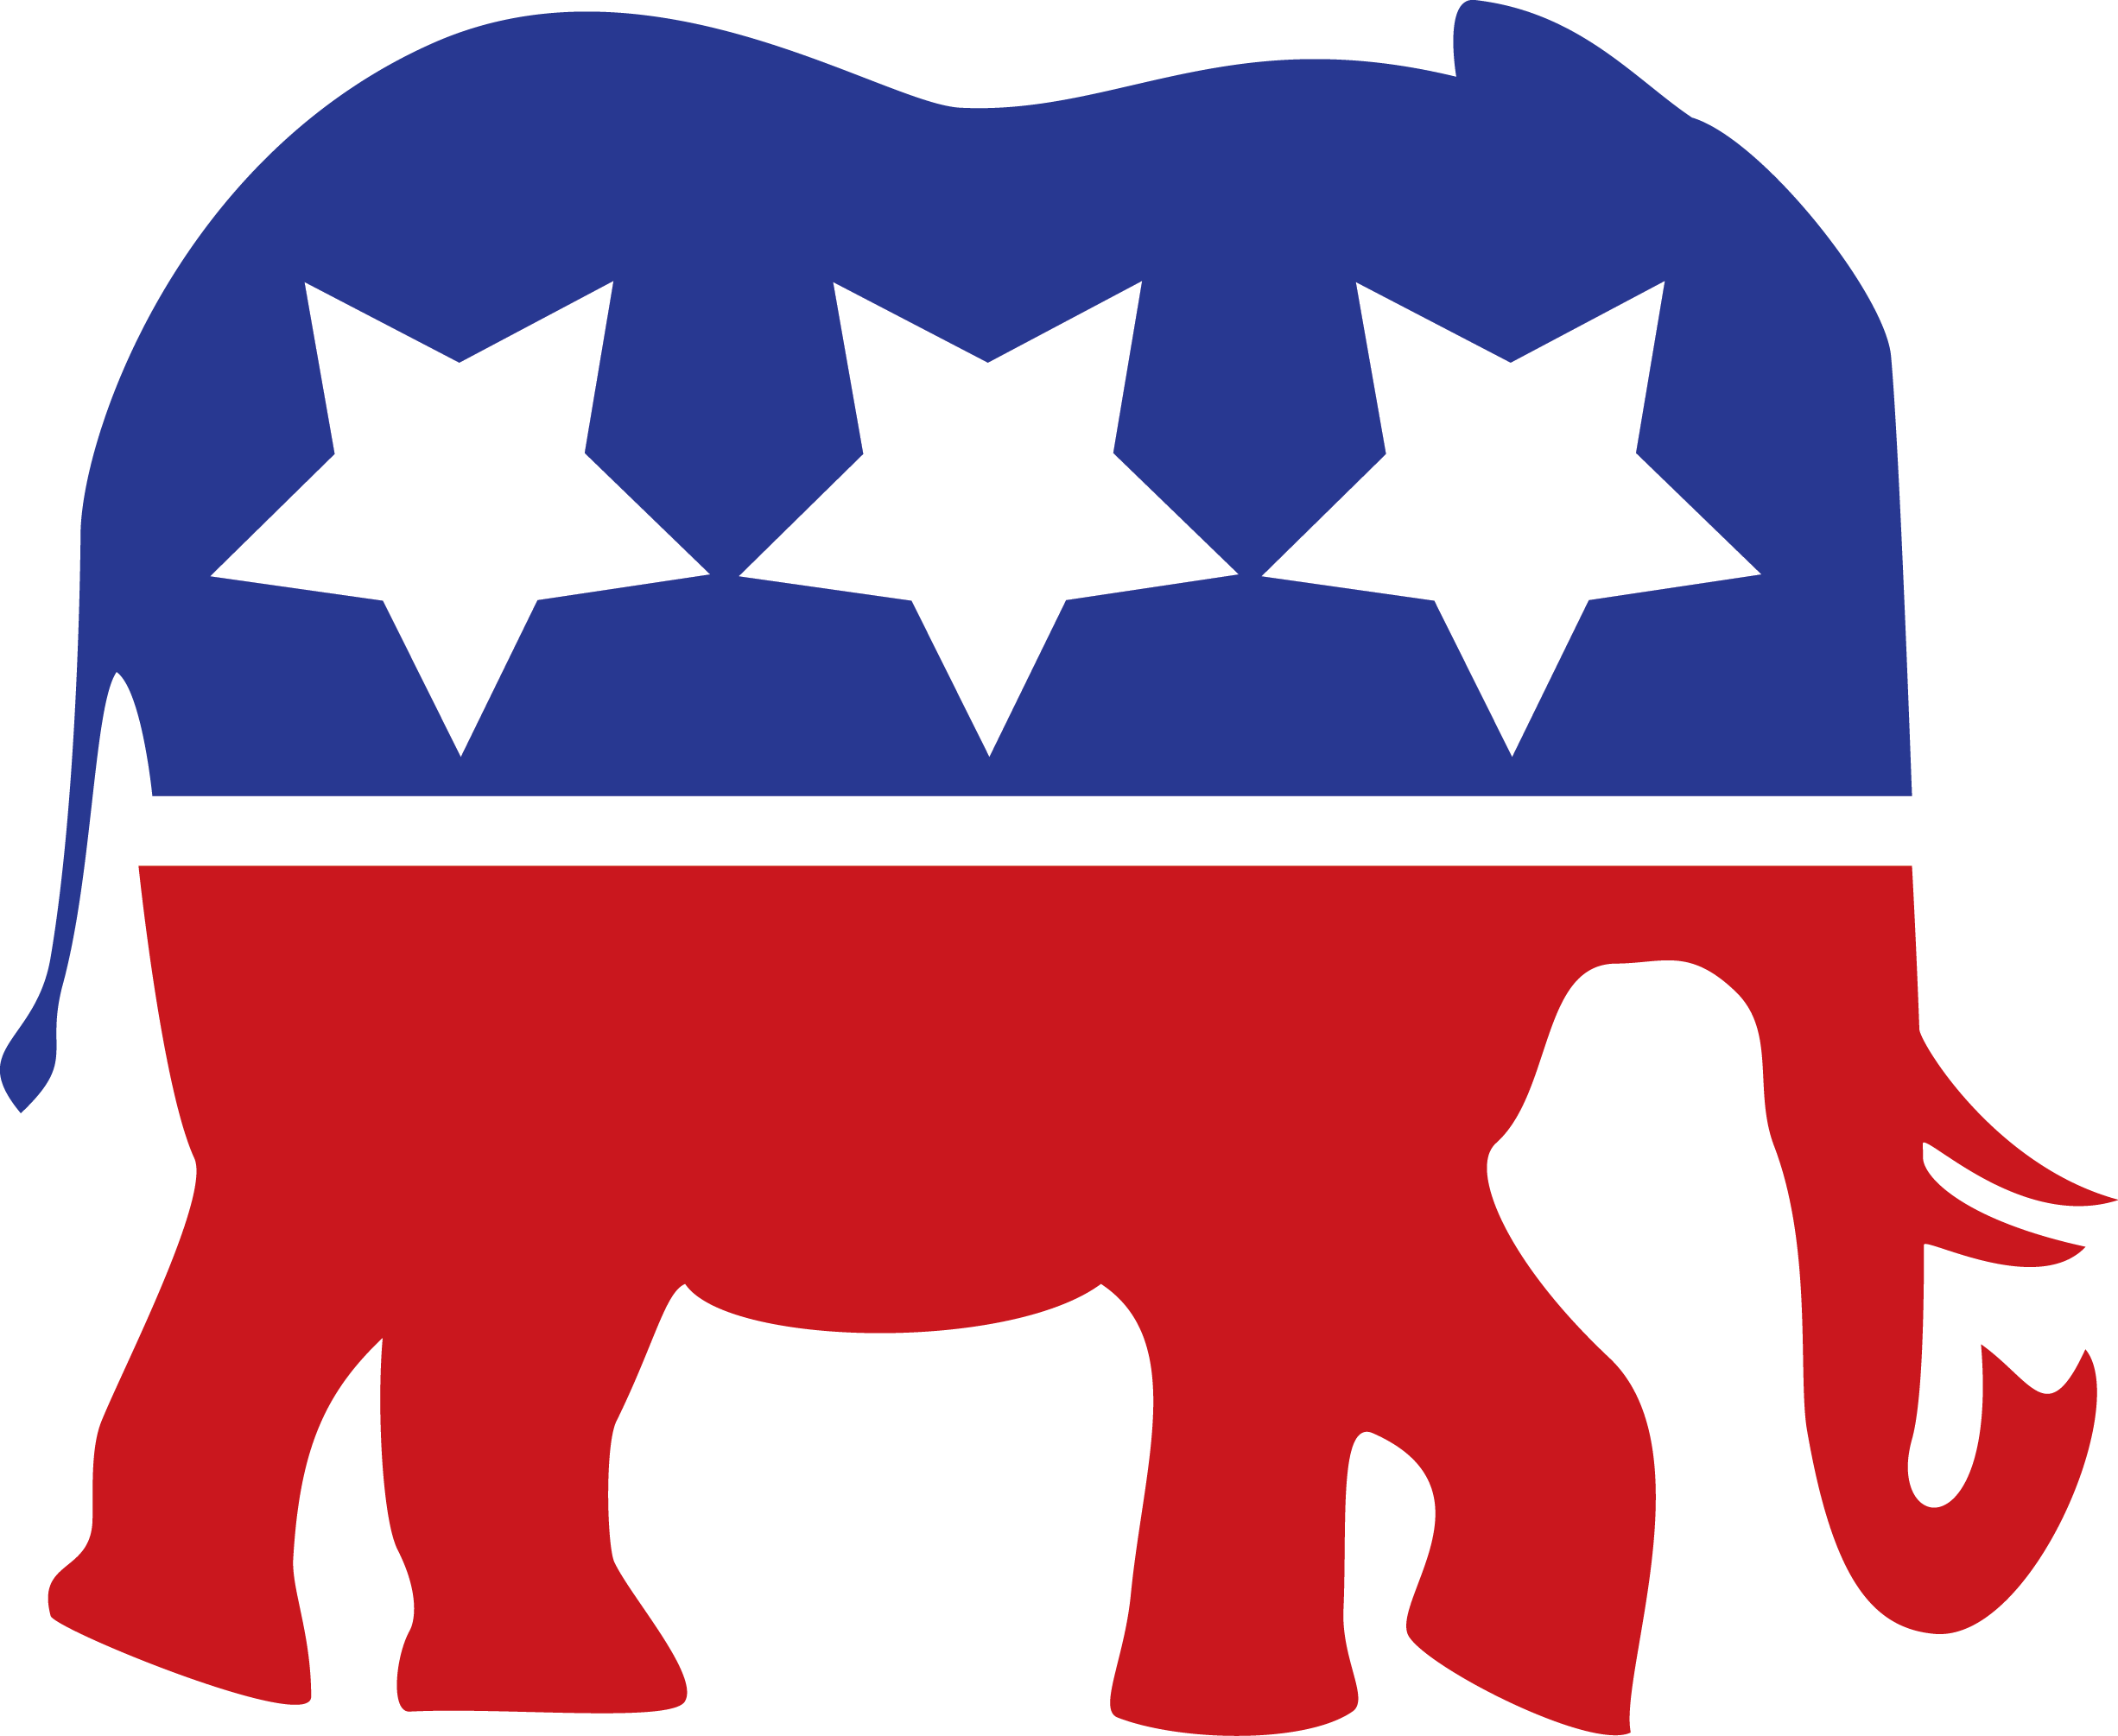 Differences Between Democrats and Republicans - EnkiCharity